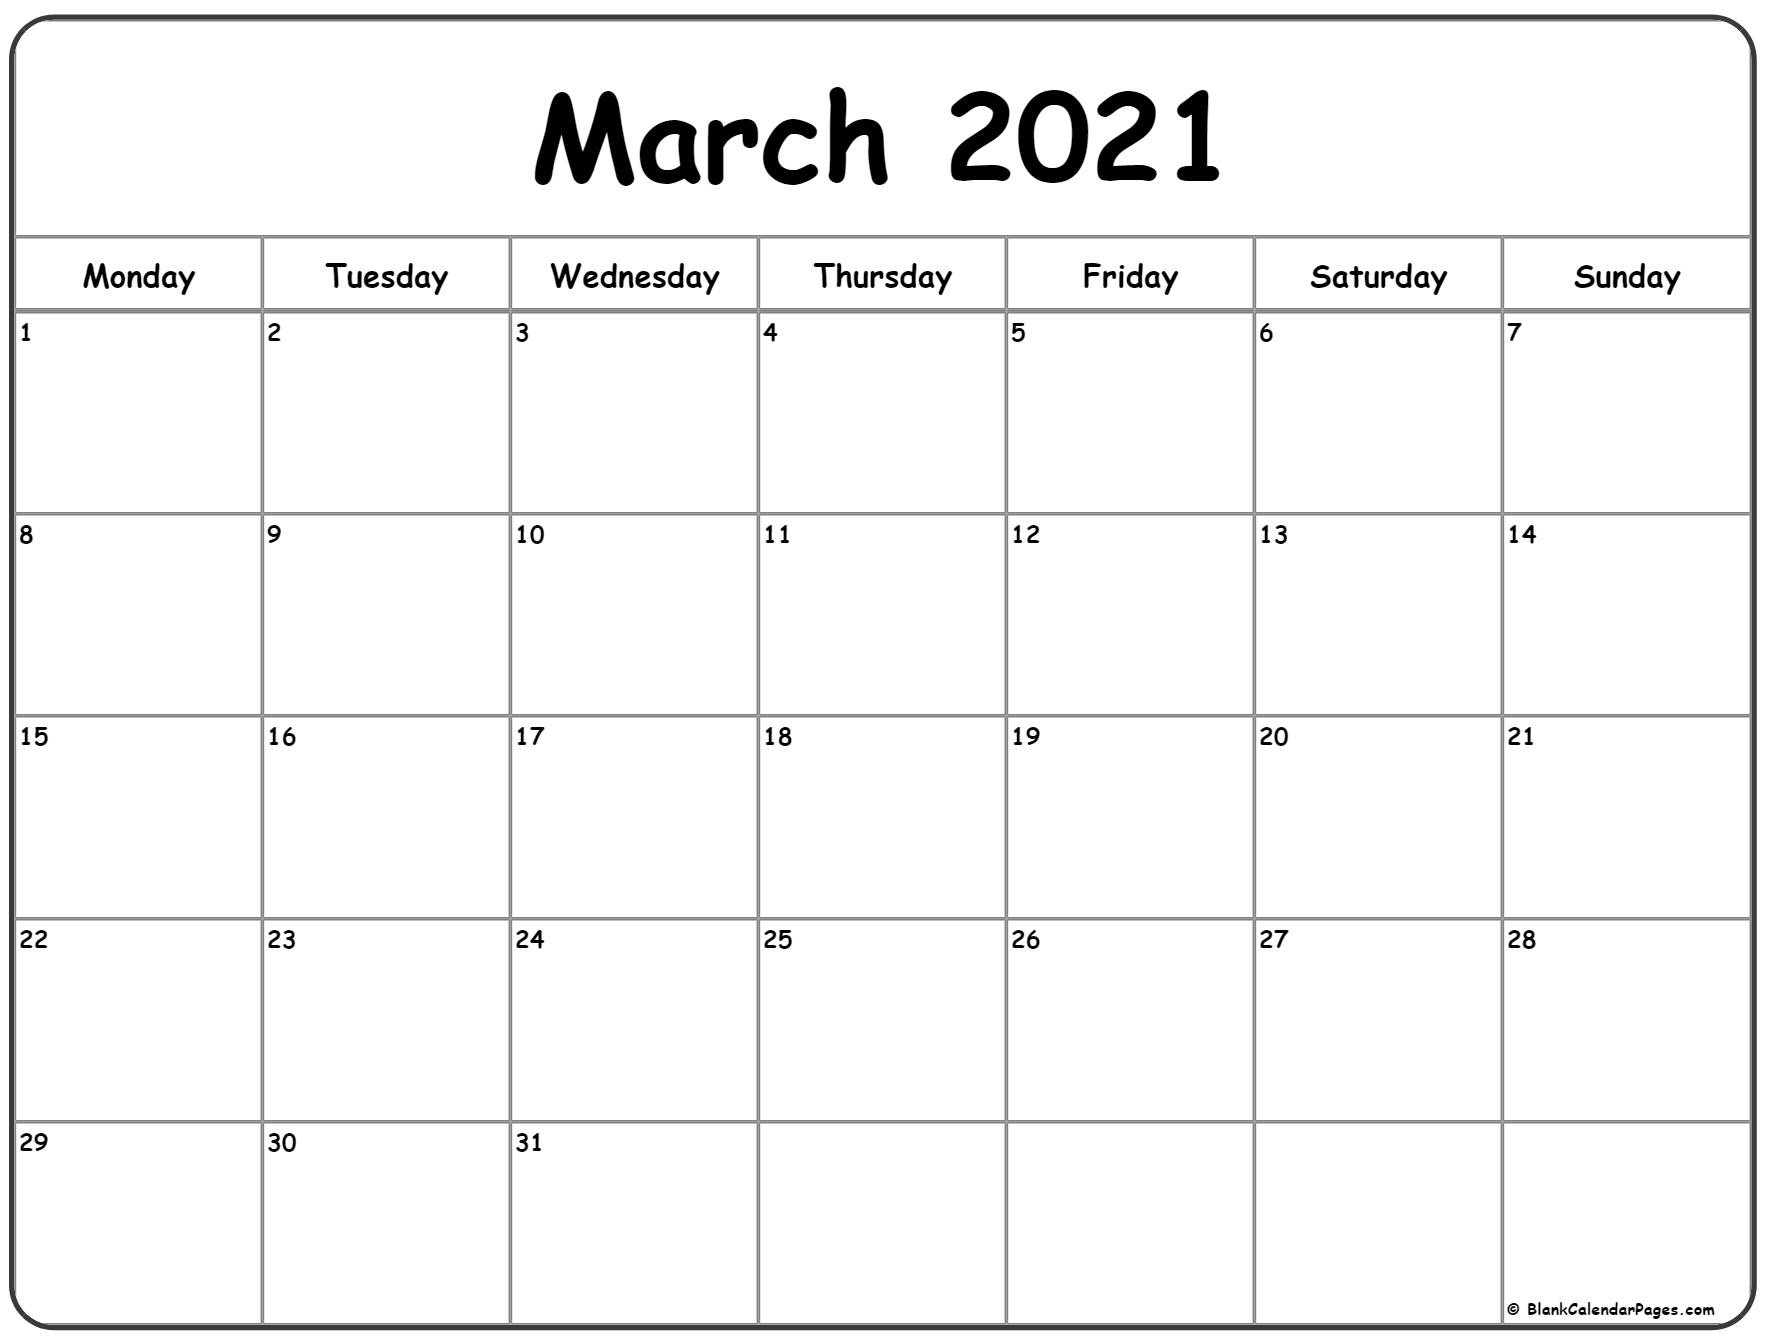 march 2021 calendar starting monday